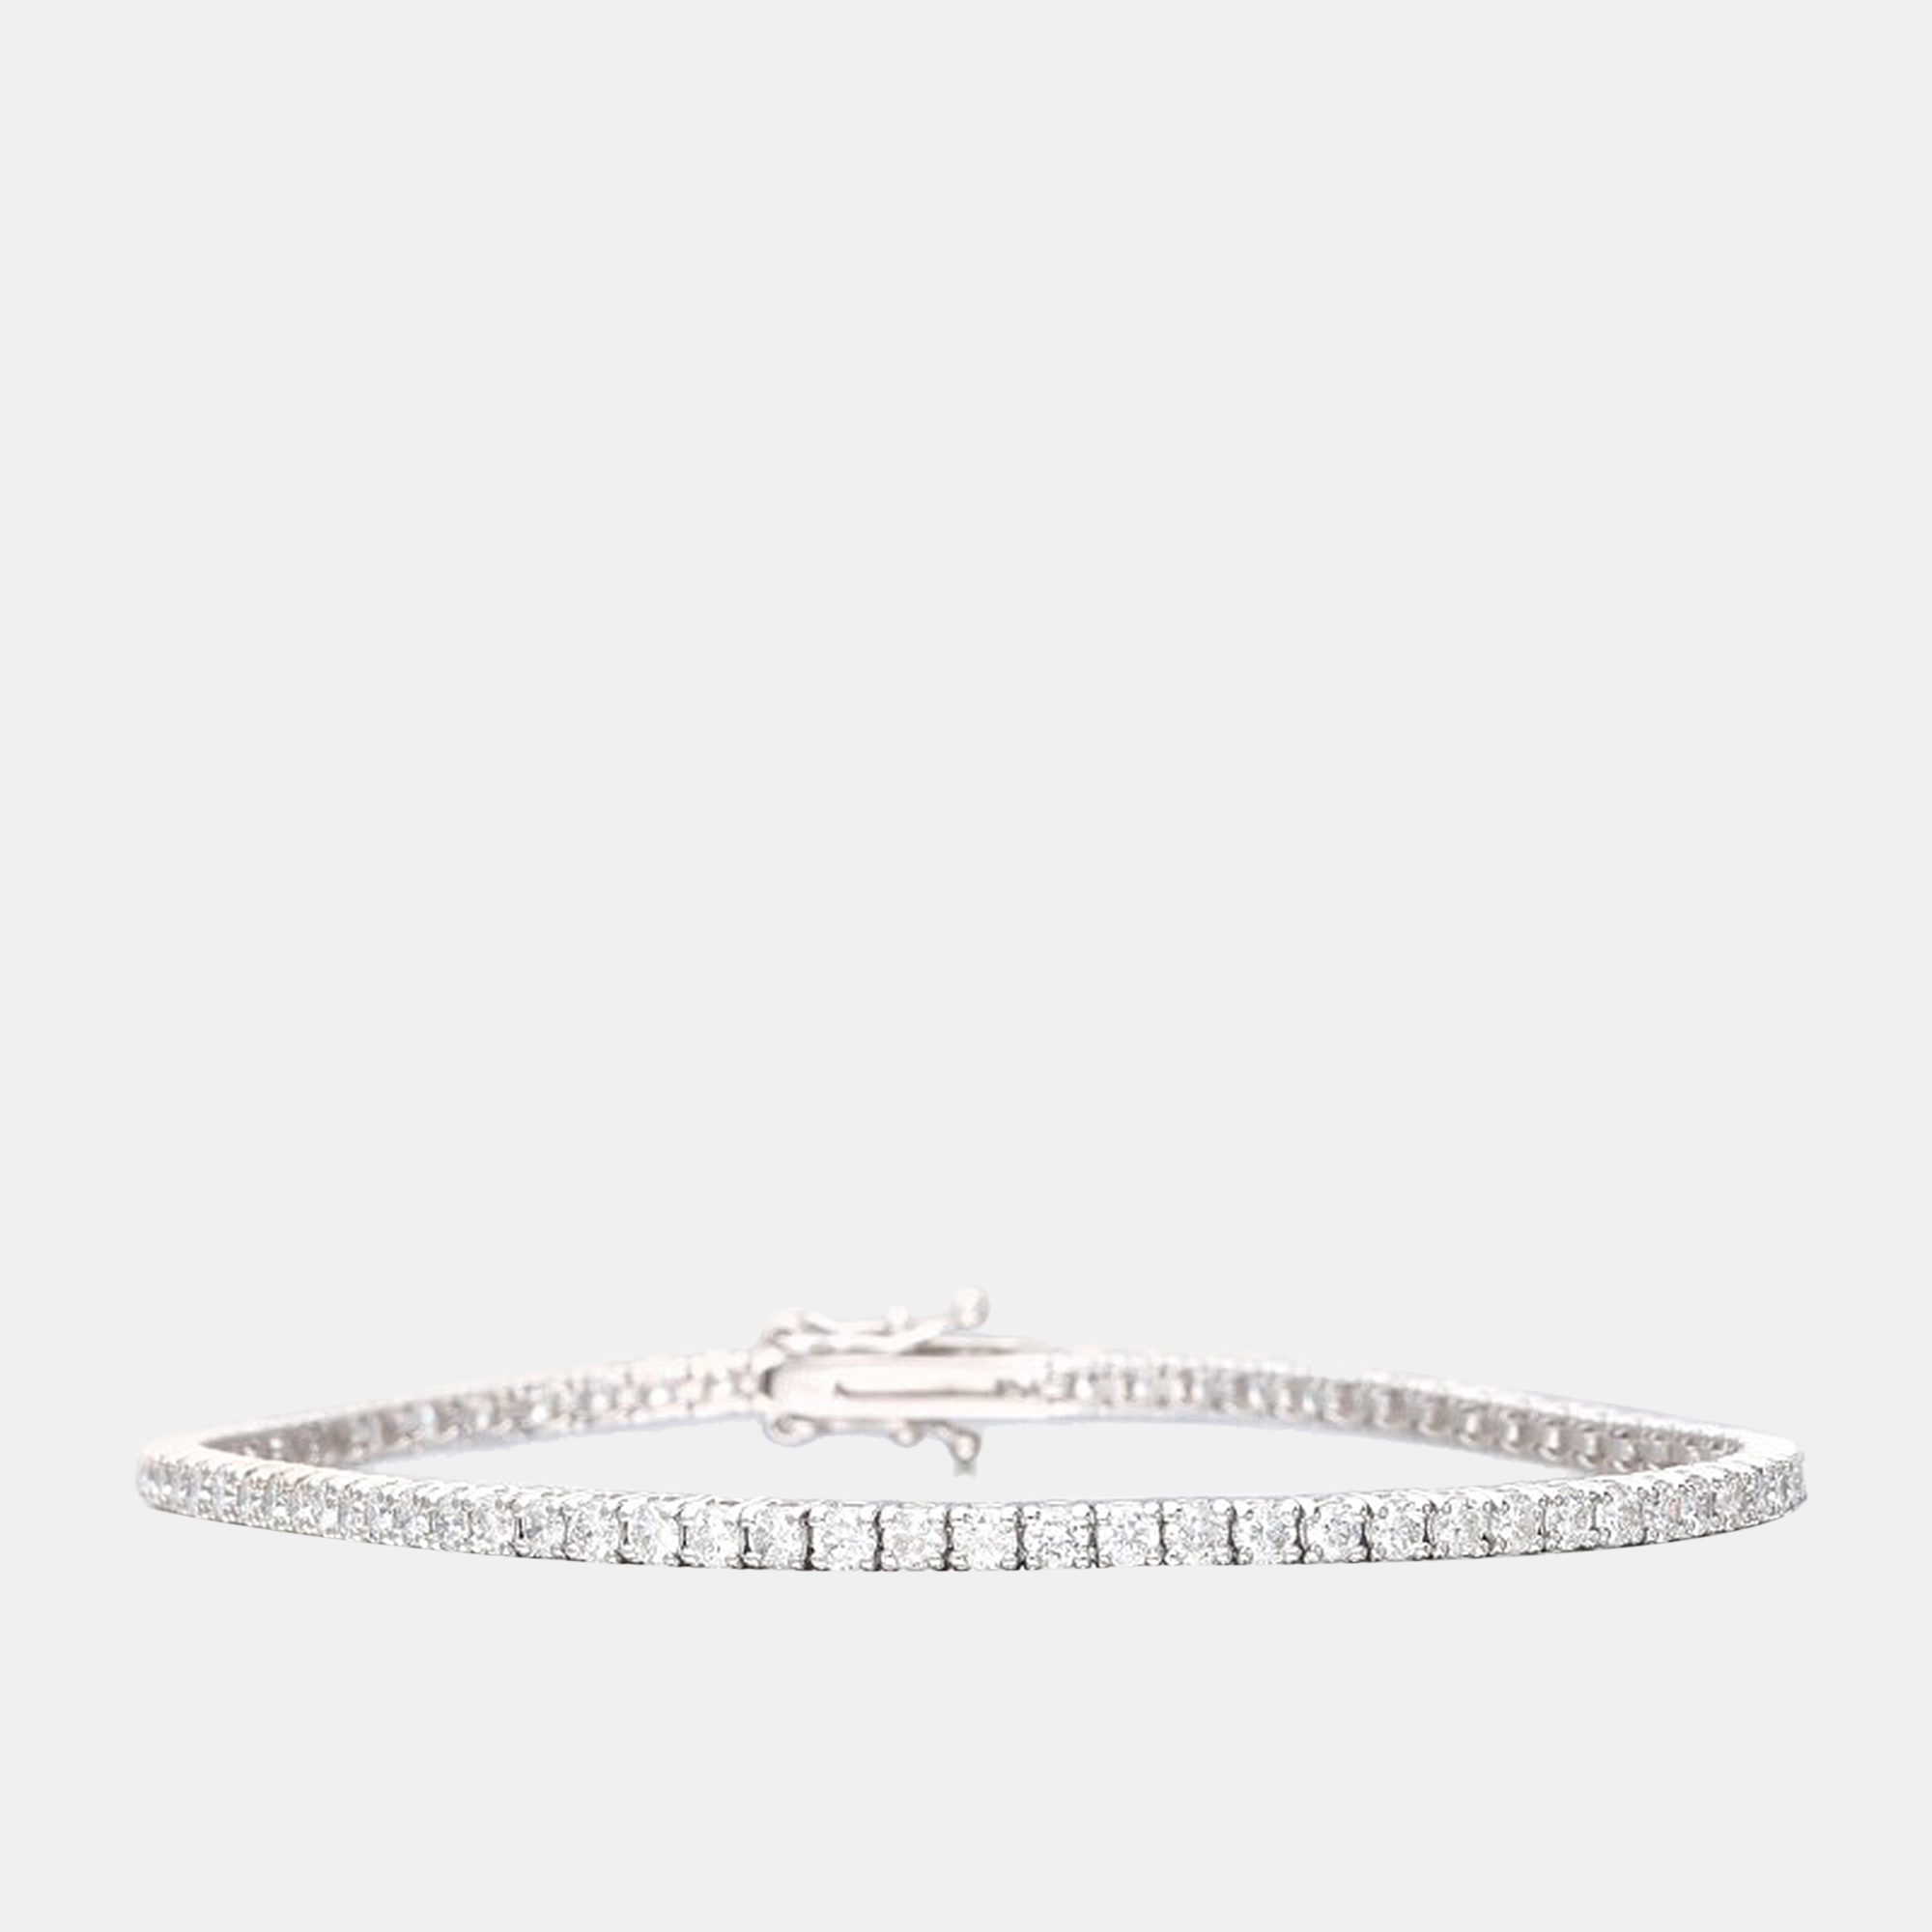 The diamond edit 18k white gold diamond 0.05 ct. (each) tennis bracelet